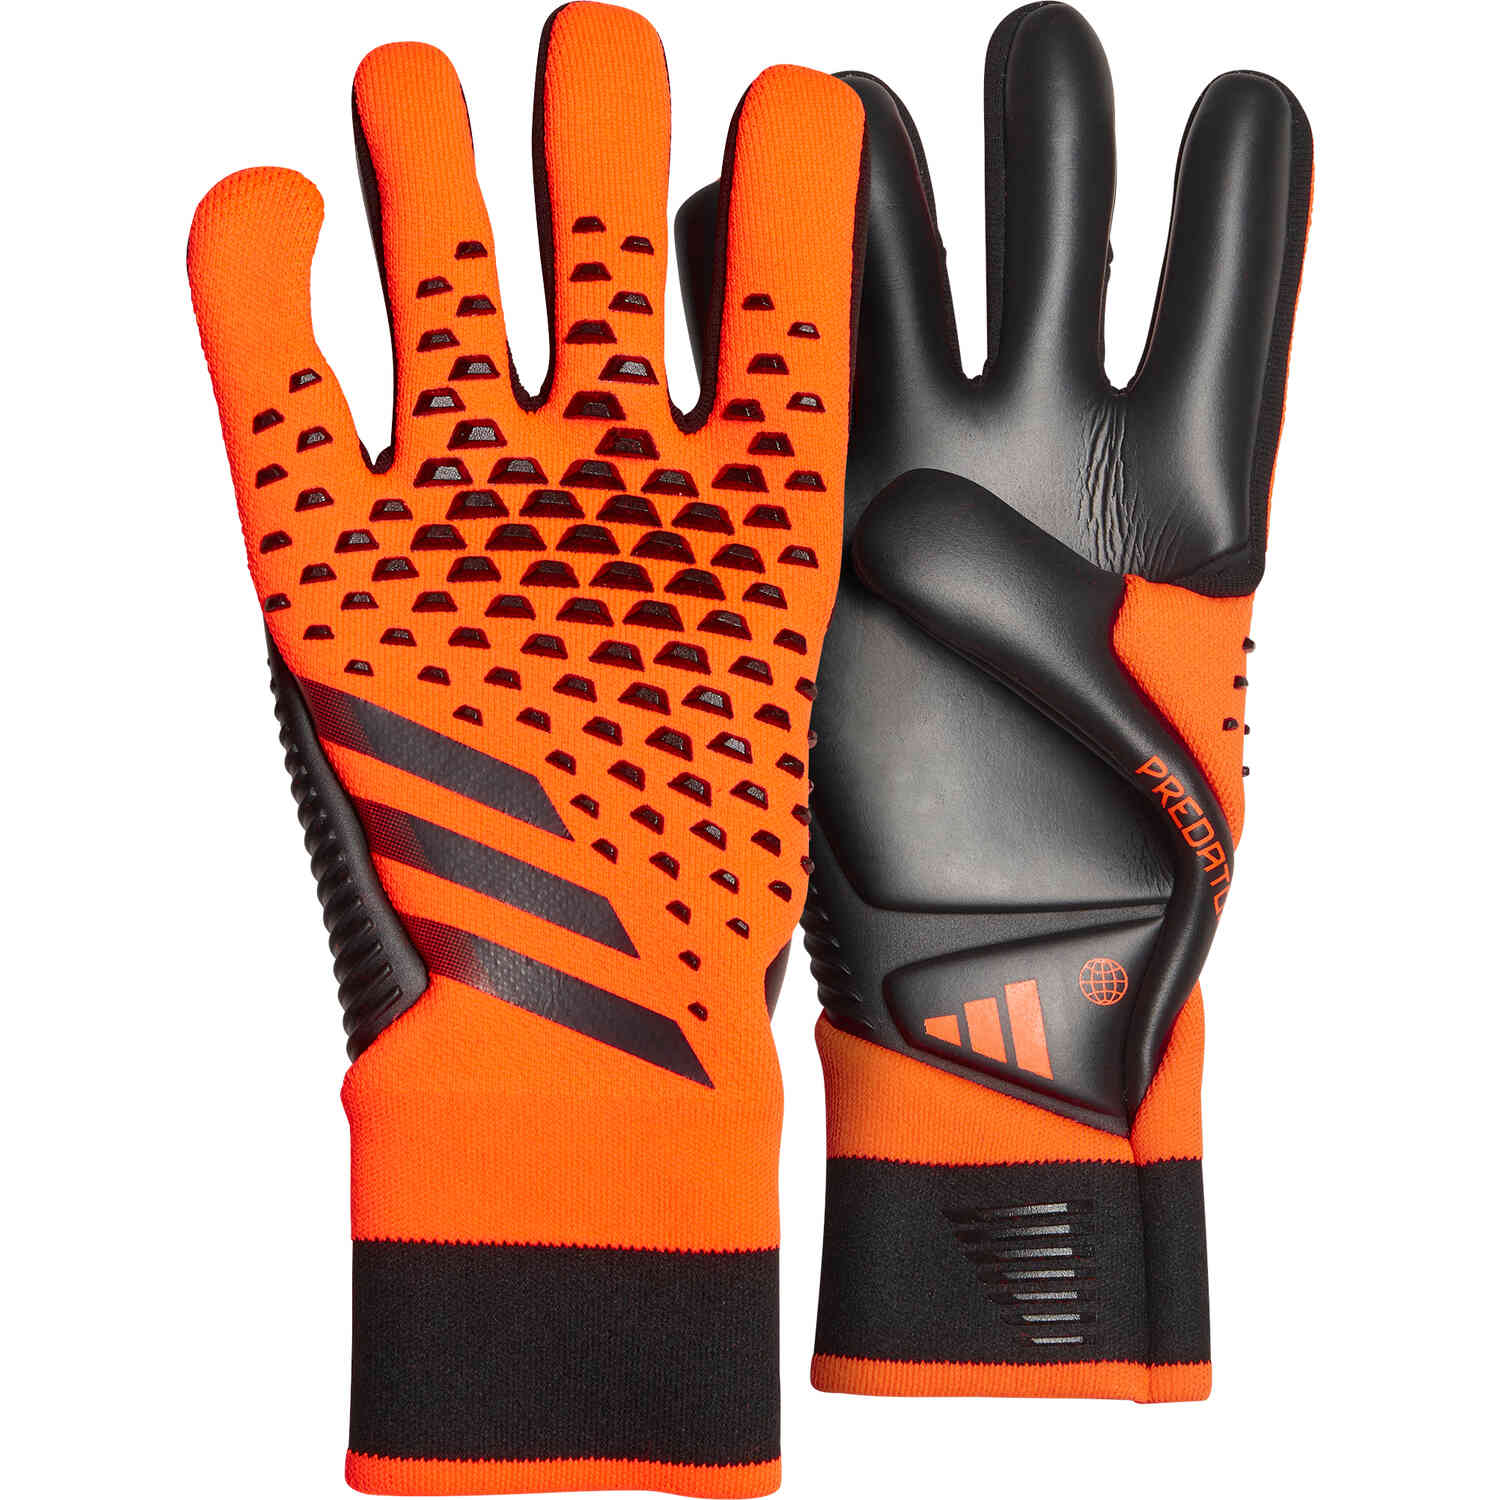 Adidas Predator Pro Goalkeeper Gloves Black / 11